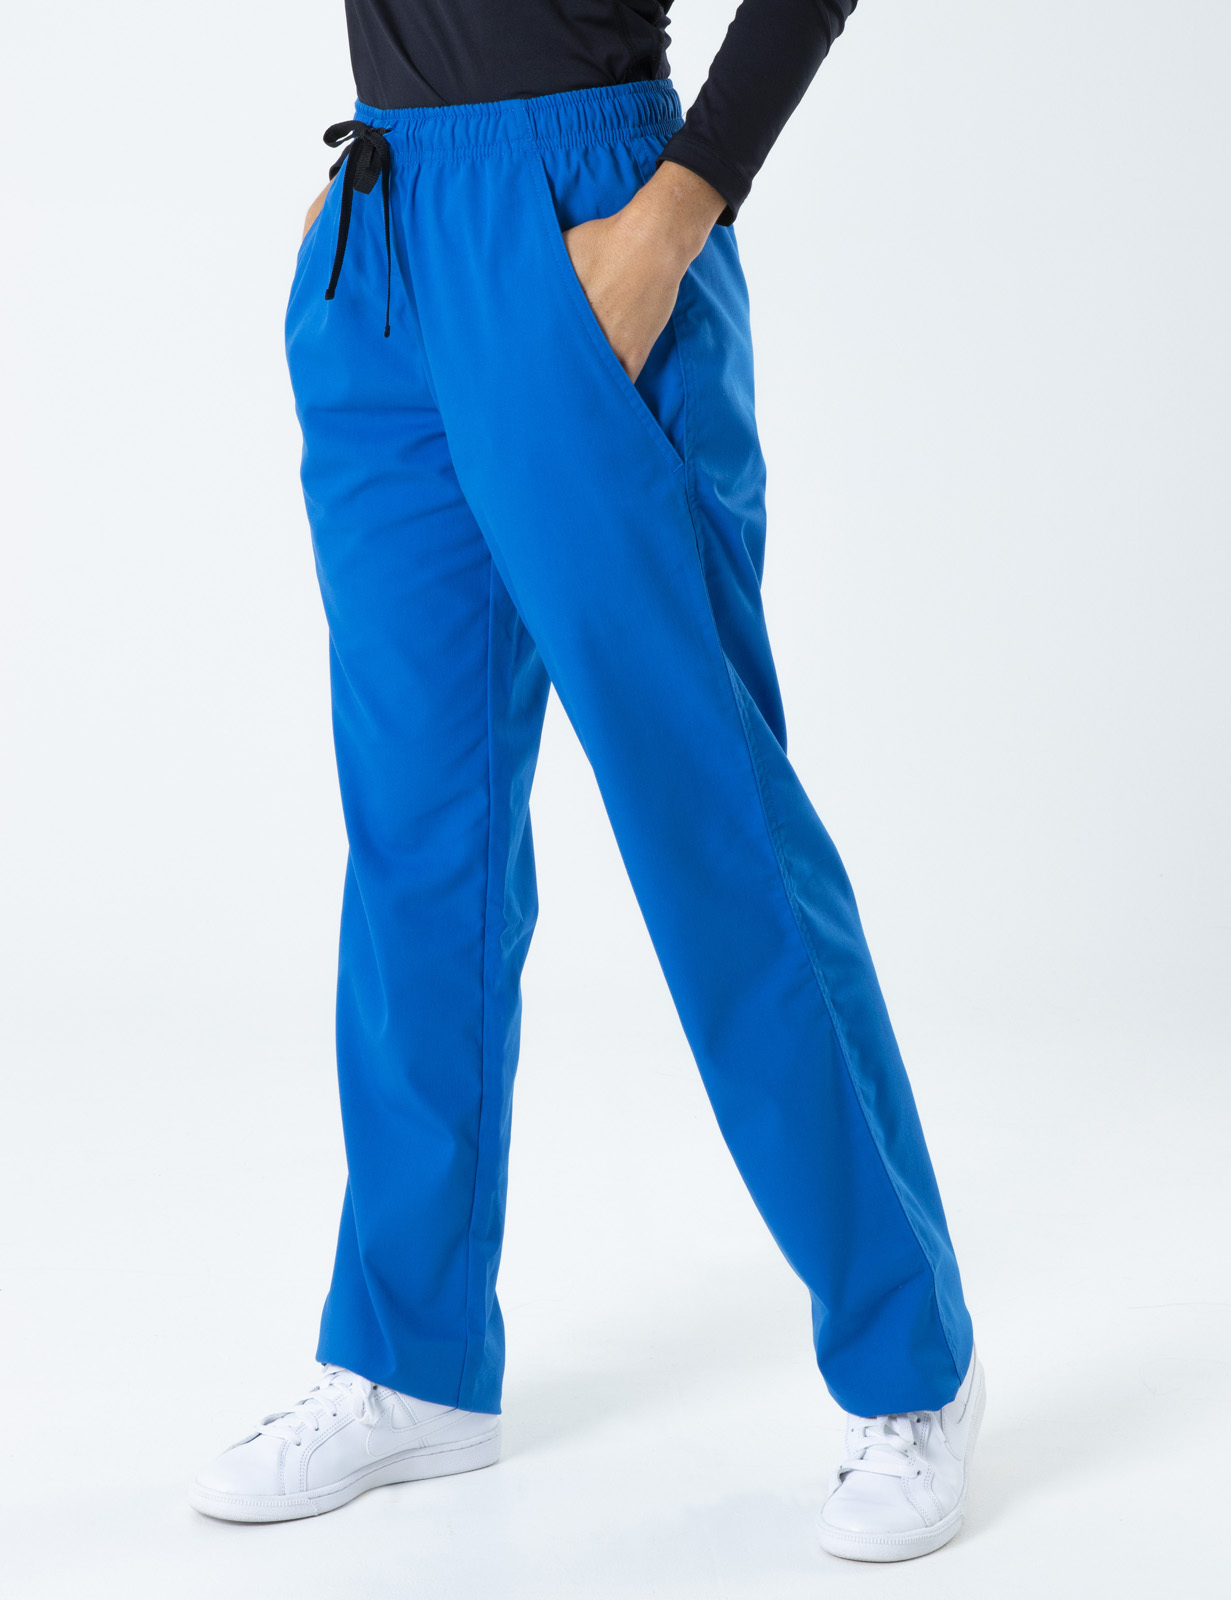 Women's Regular Cut Pants - Royal - 3X Large